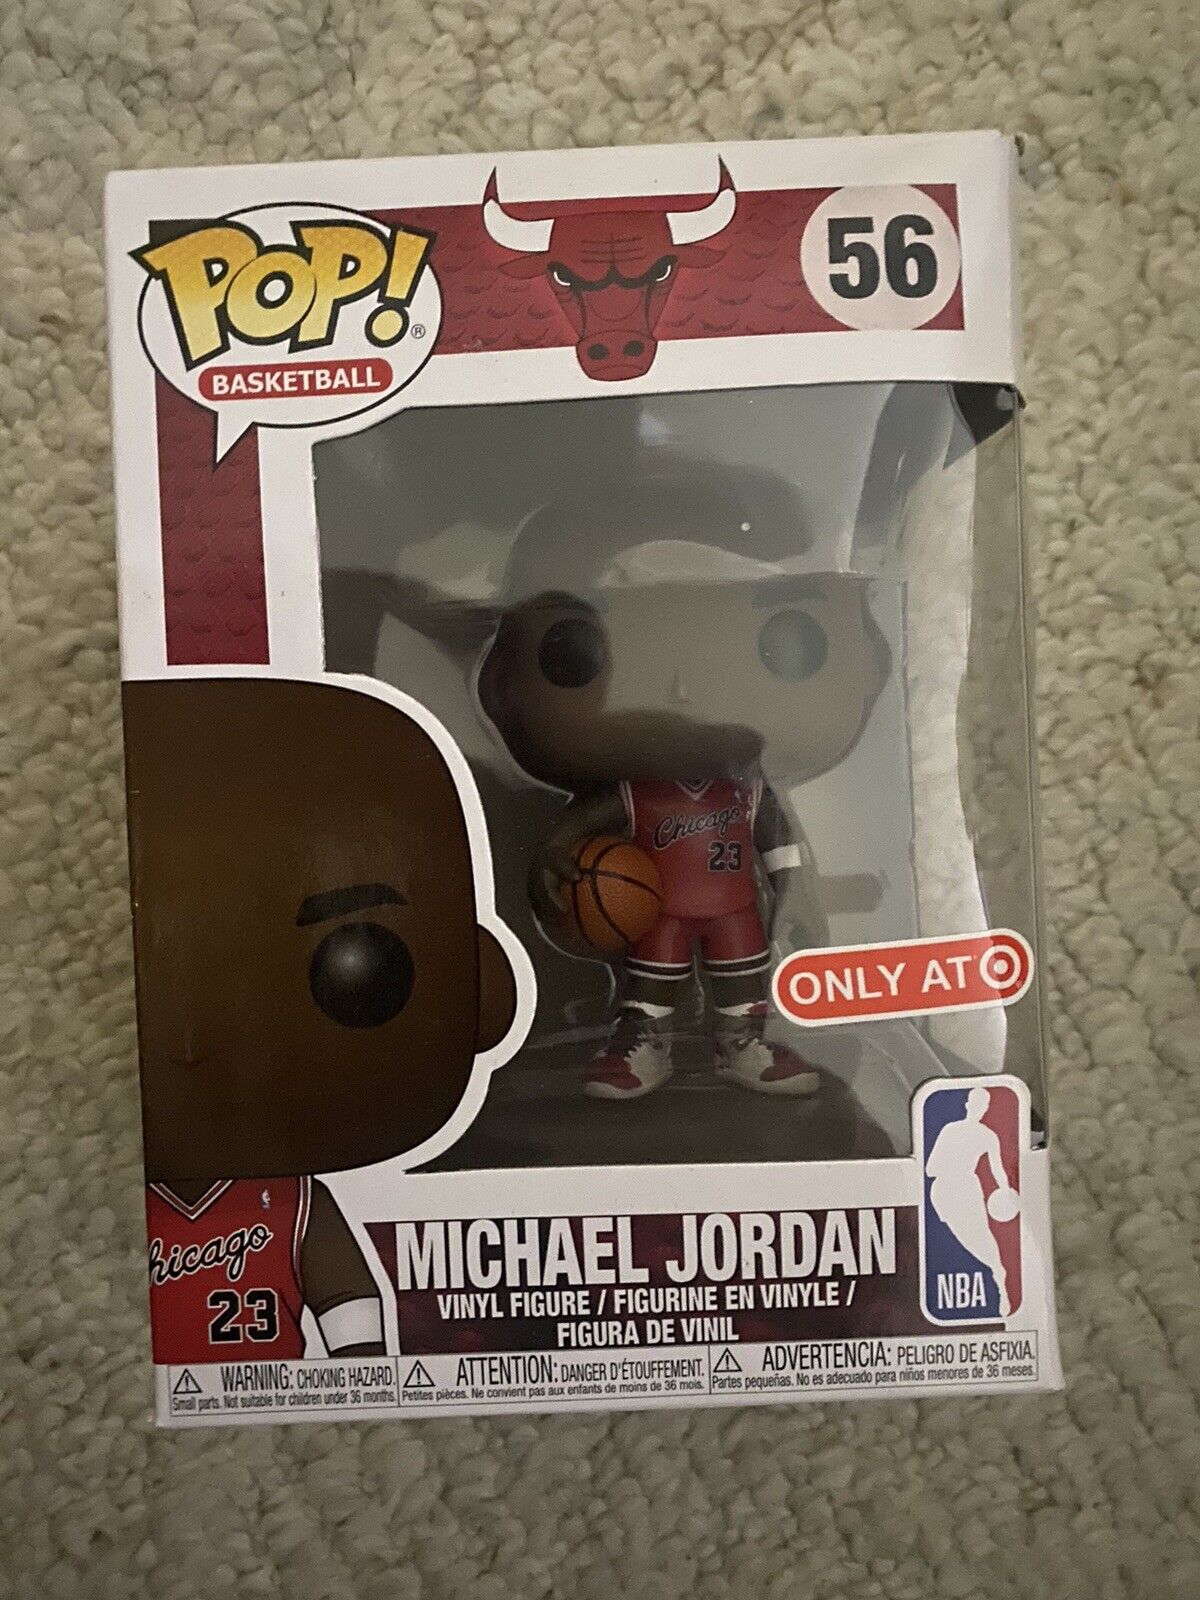 Funko Pop Basketball Target Exclusive #56 Michael Jordan Brand New